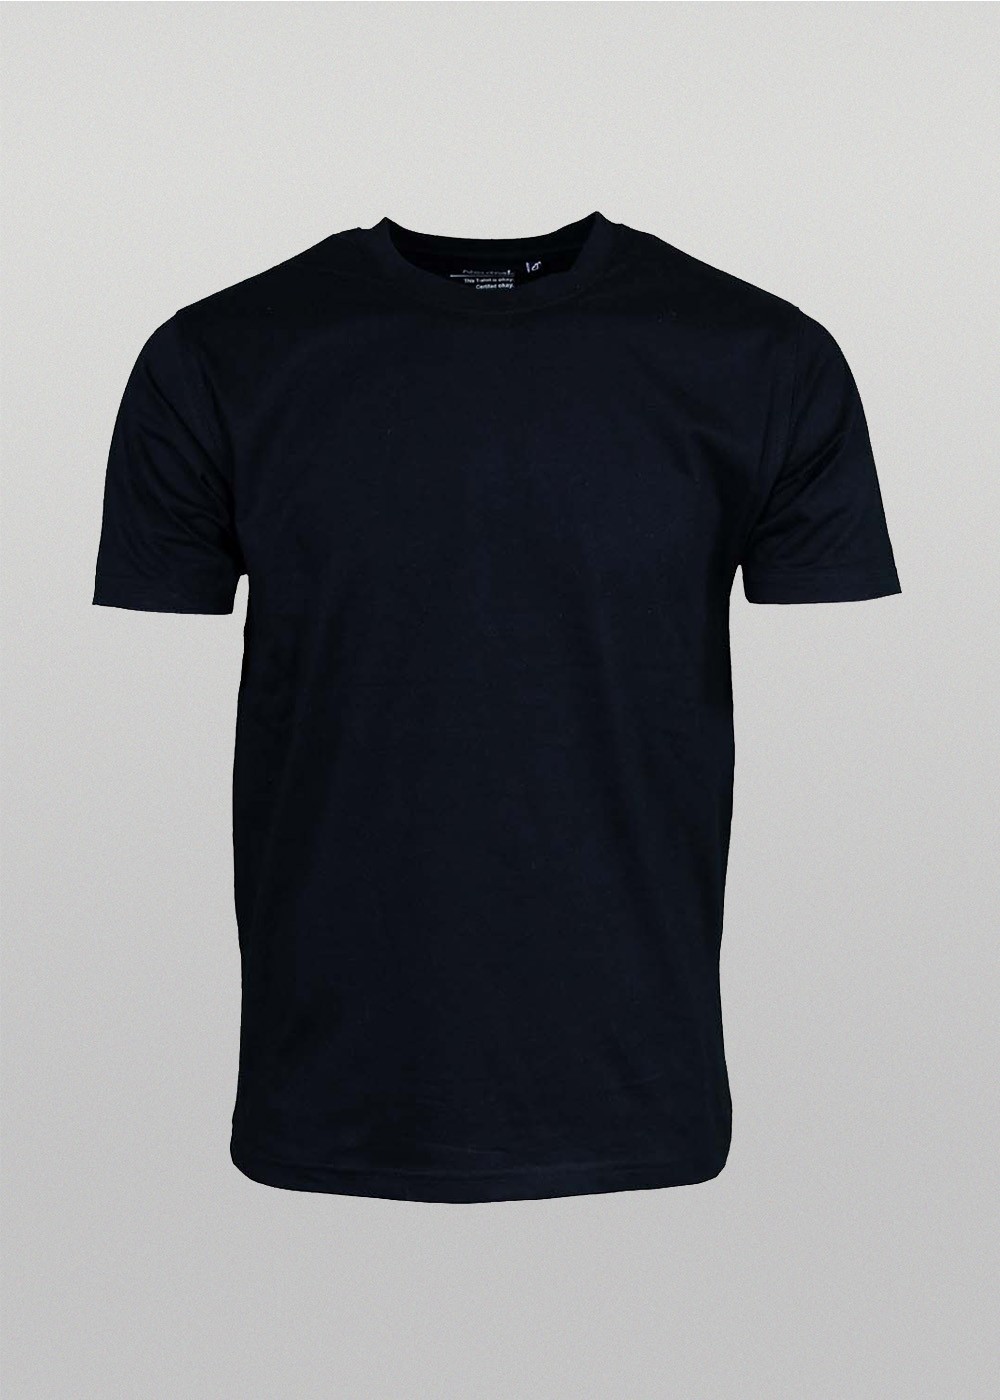 pebermynte slutningen Indvending Bæredygtig Unisex T-shirt - Økologisk Faitrade Certificeret